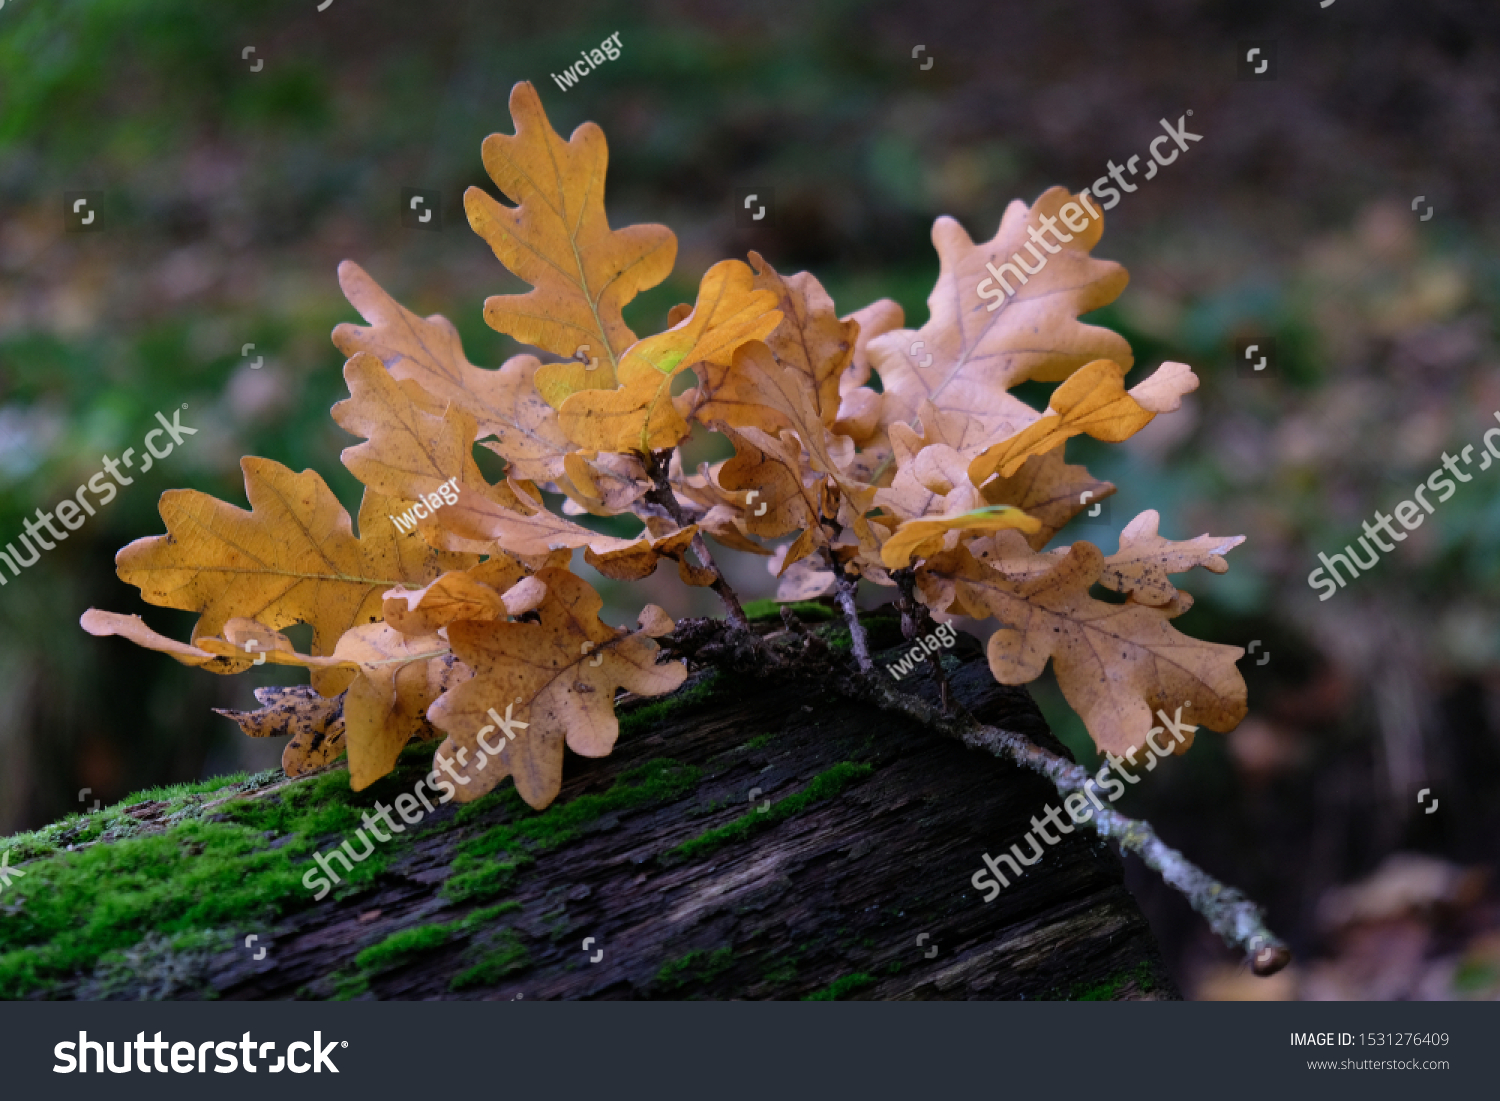 Oak twig with autumn leaves on a forest path. Quercus robur, common oak, pedunculate oak, European oak. #1531276409